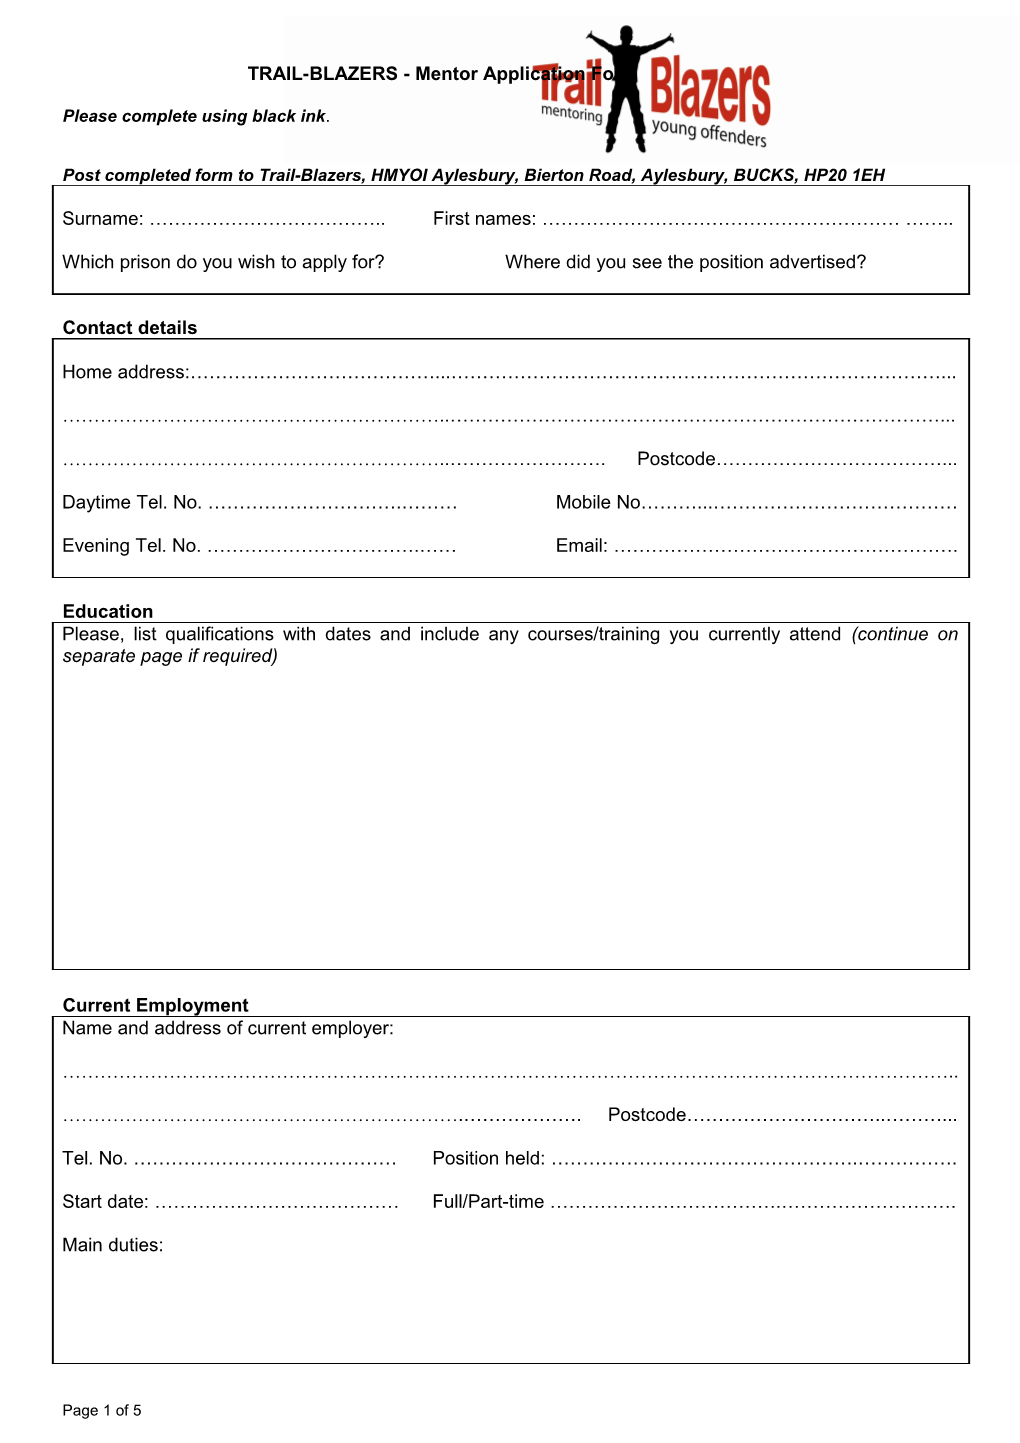 TRAIL-BLAZERS Mentor Application Form